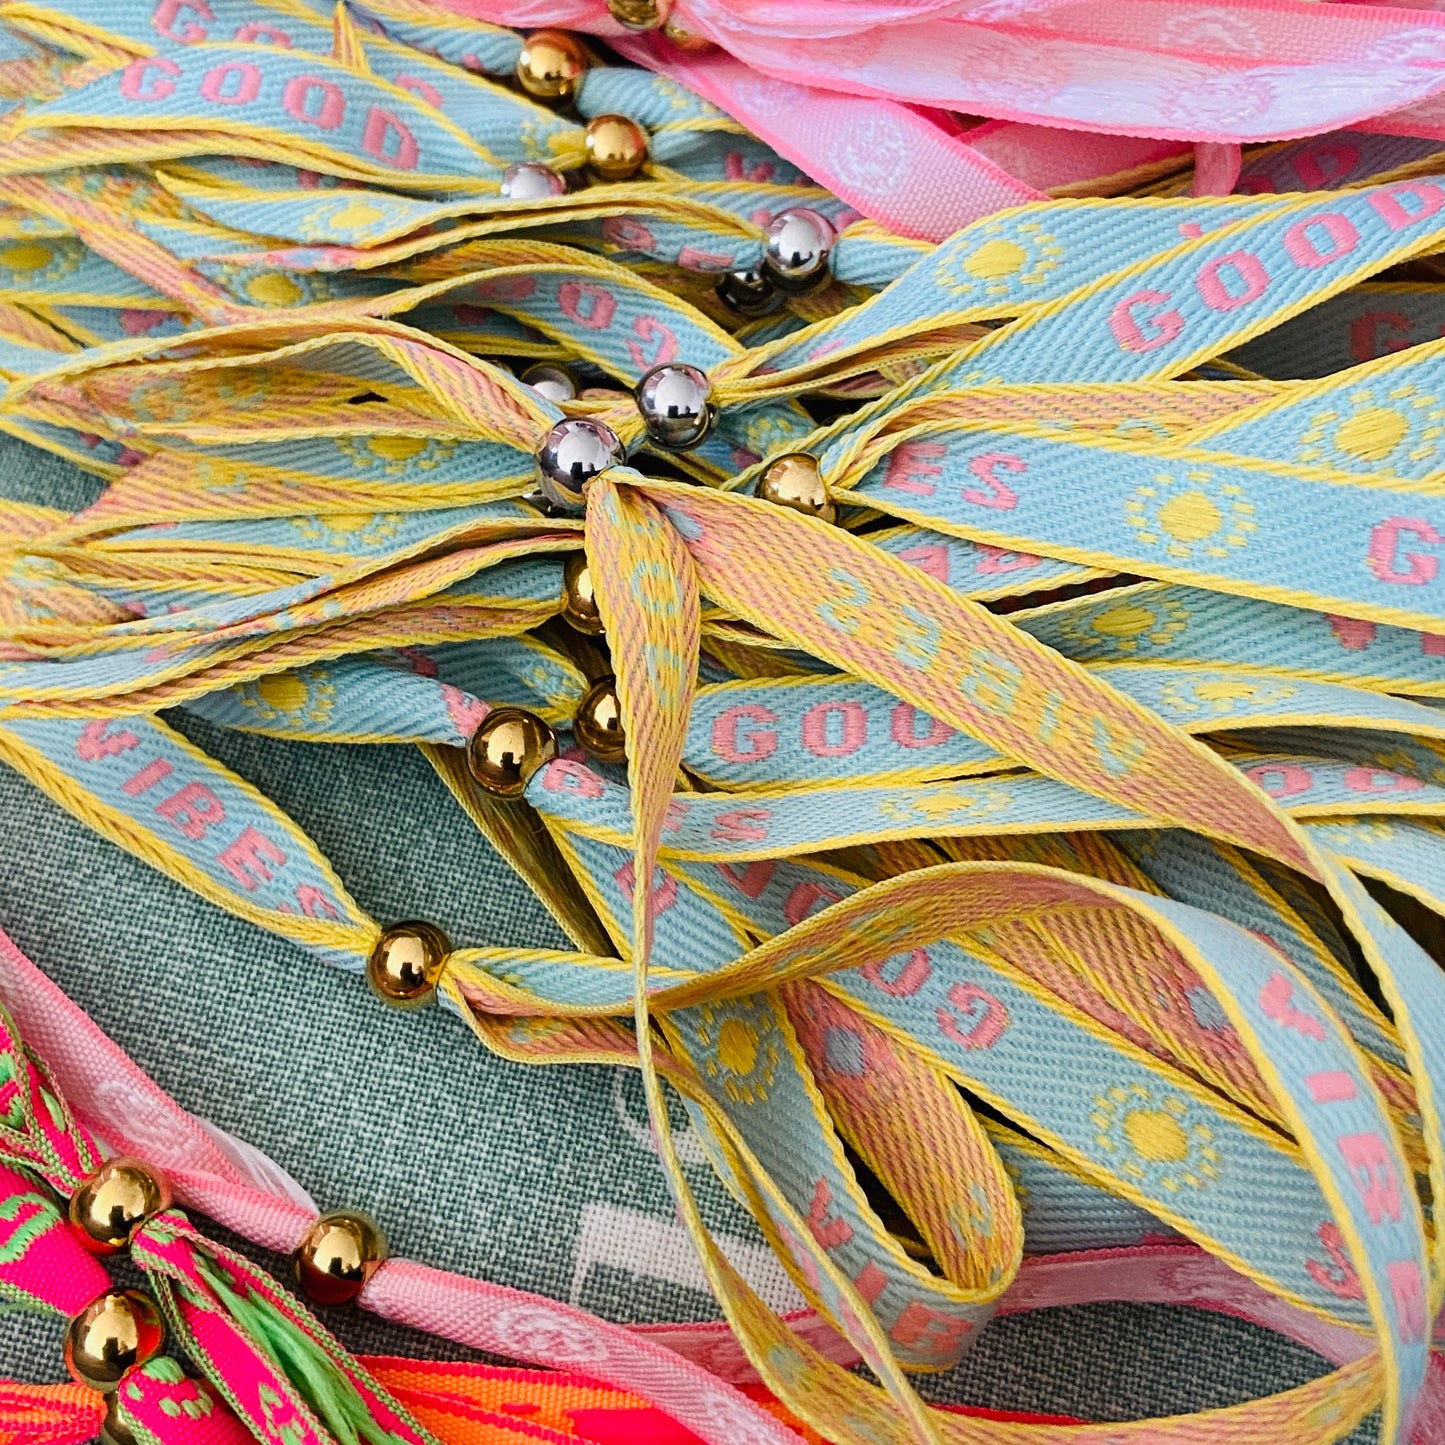 Woven ribbon SMILEY pink / flat 10mm / 100cm